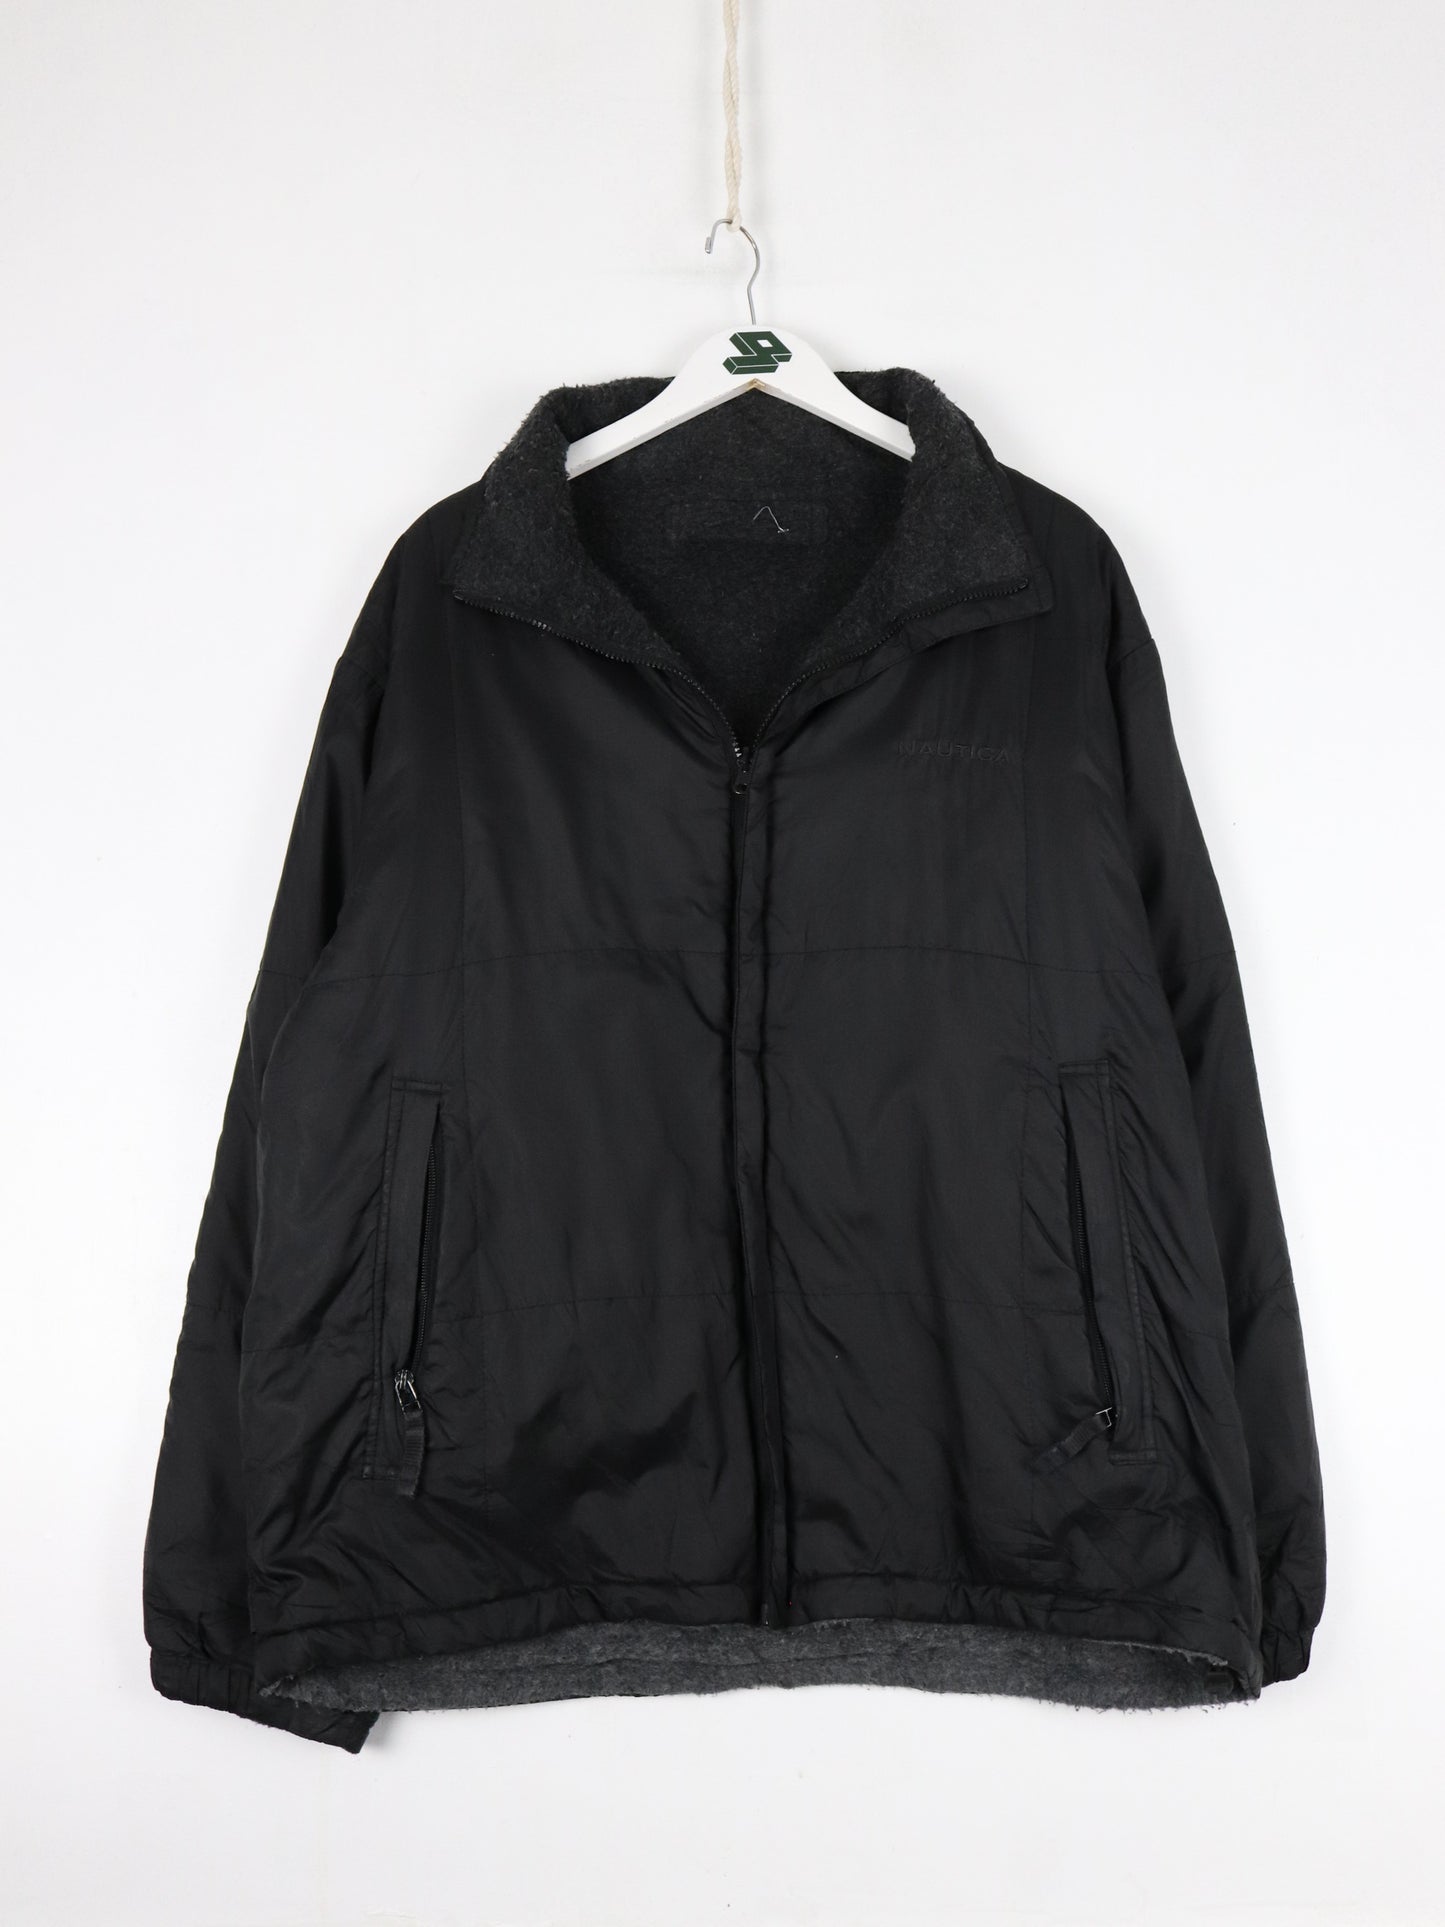 Vintage Nautica Jacket Mens Large Black Grey Reversible Fleece Coat